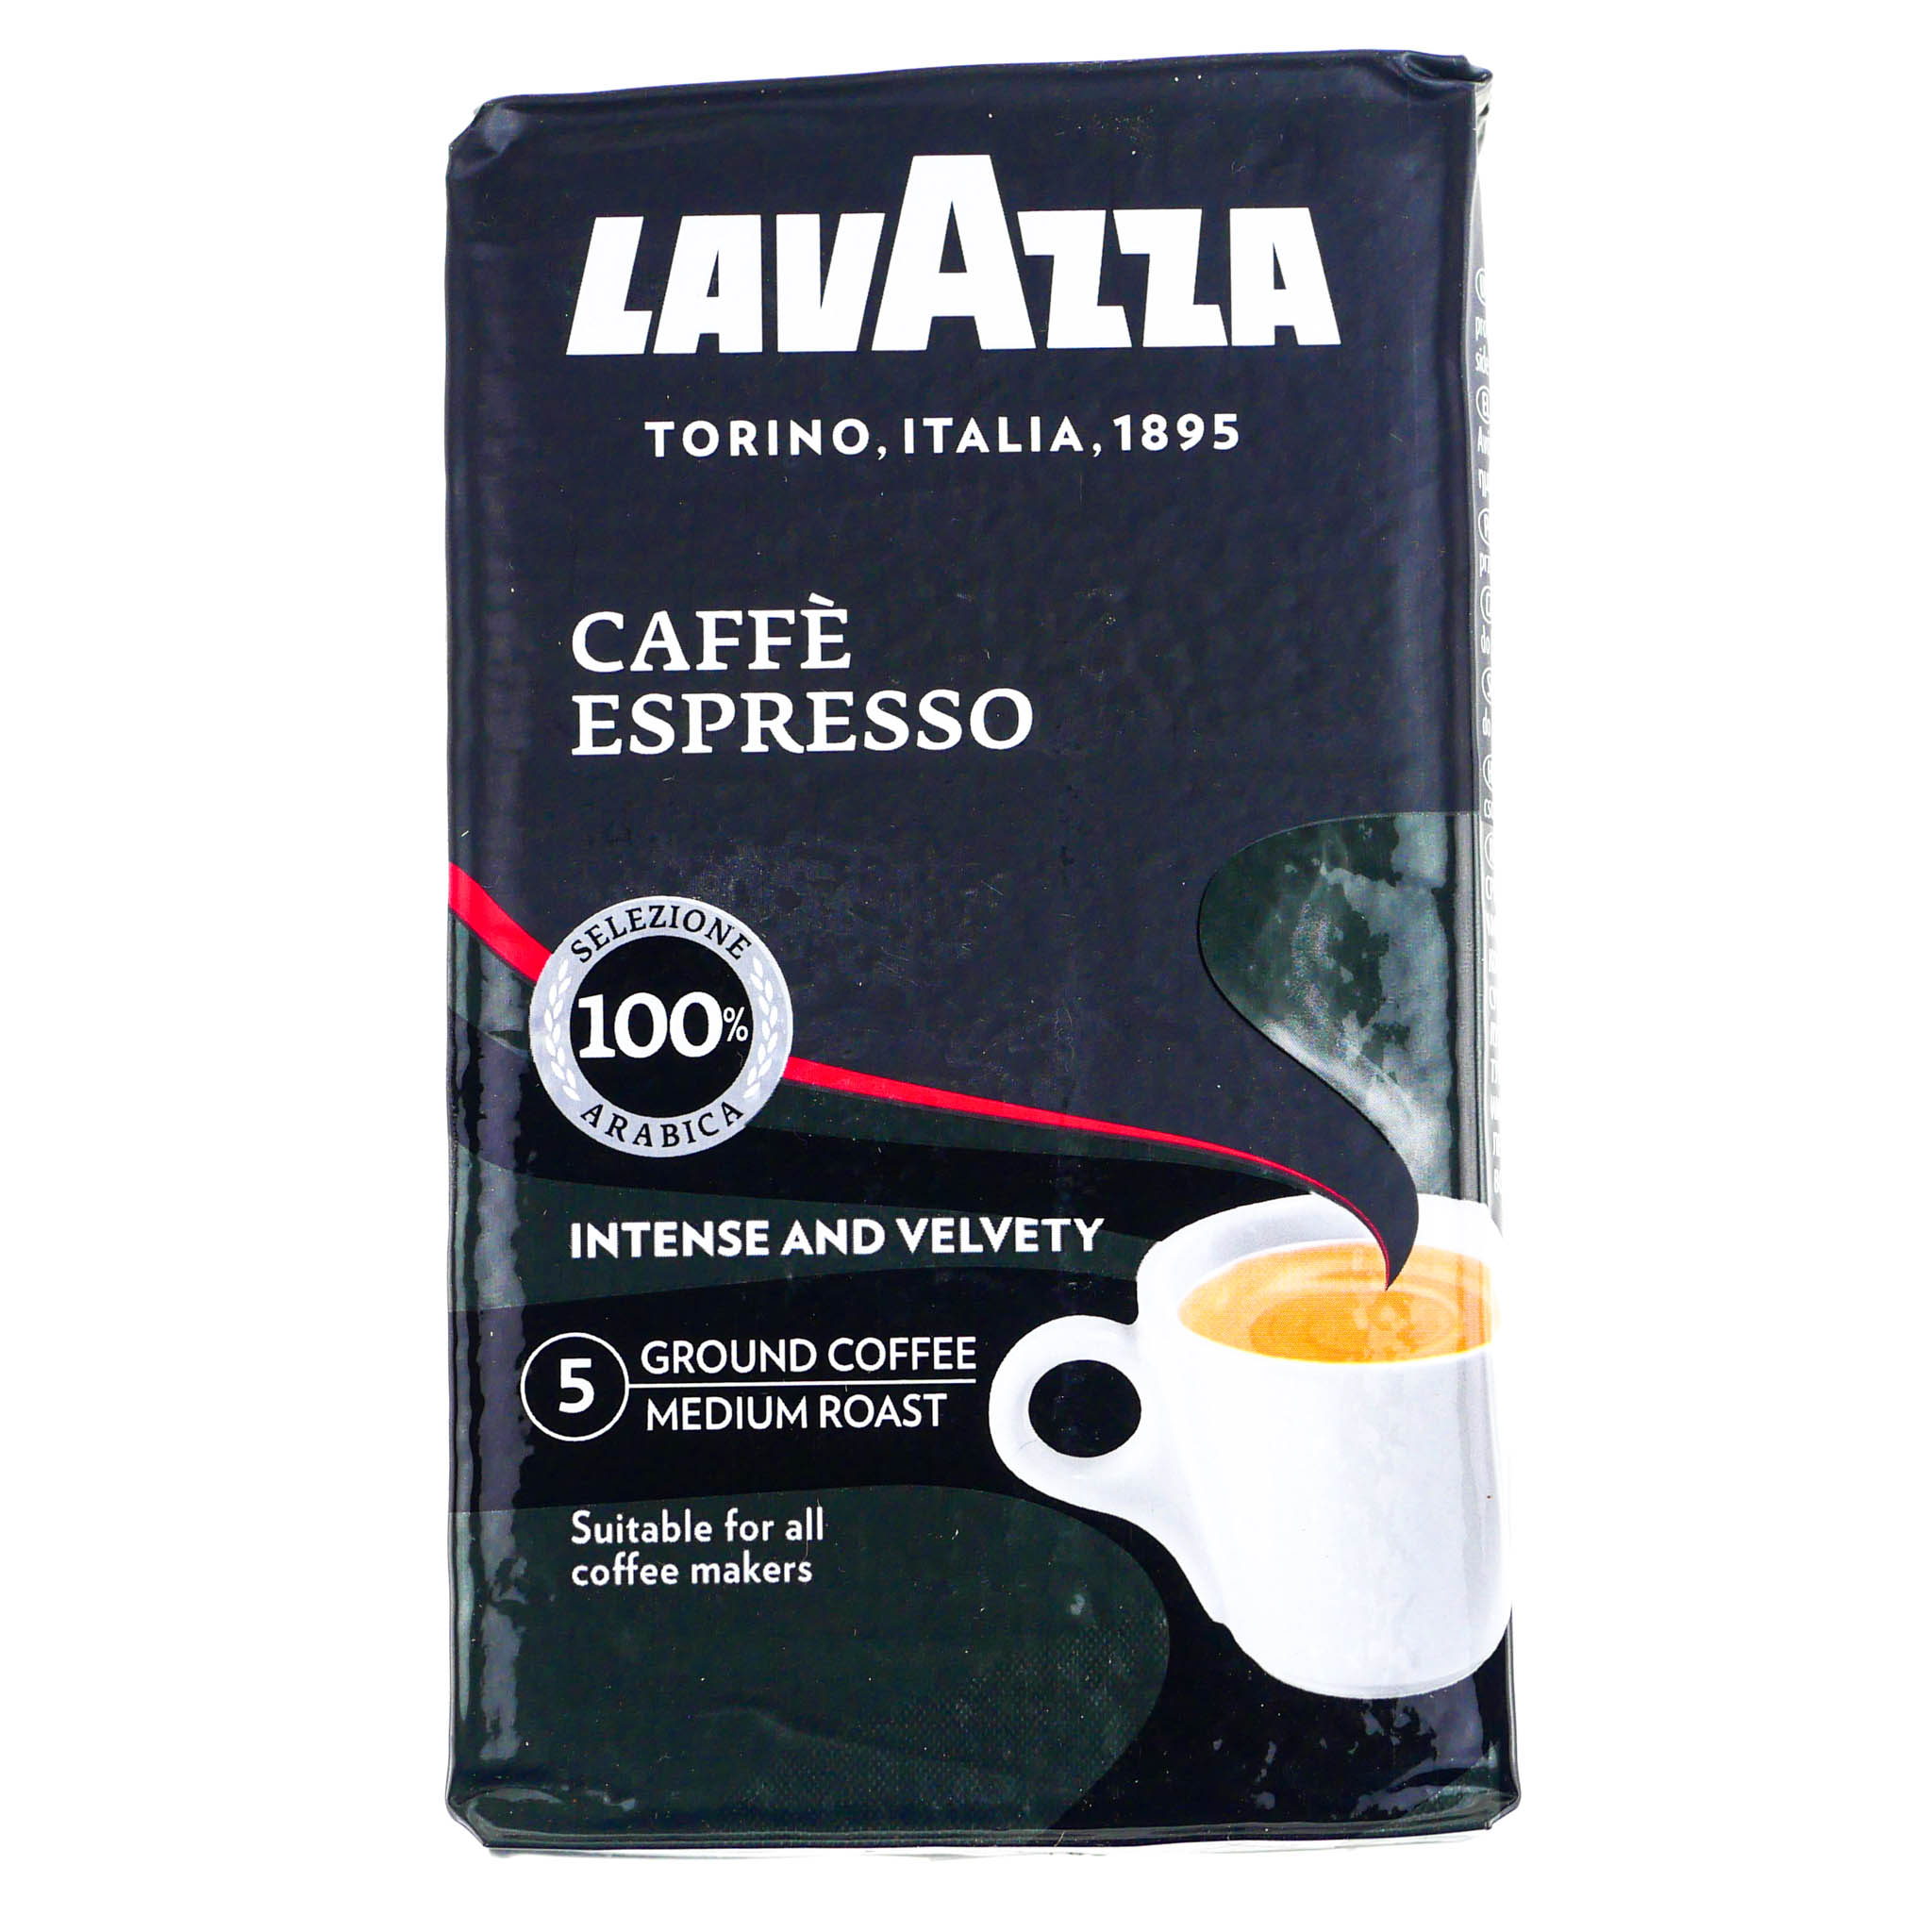 Кофе lavazza молотый 250. Lavazza Espresso (Лавацца эспрессо) кофе молотый, 250 г.. Lavazza кофе молотый 250. Кофе Лавацца 250 гр. Кофе молотый Lavazza Espresso 250 гр.